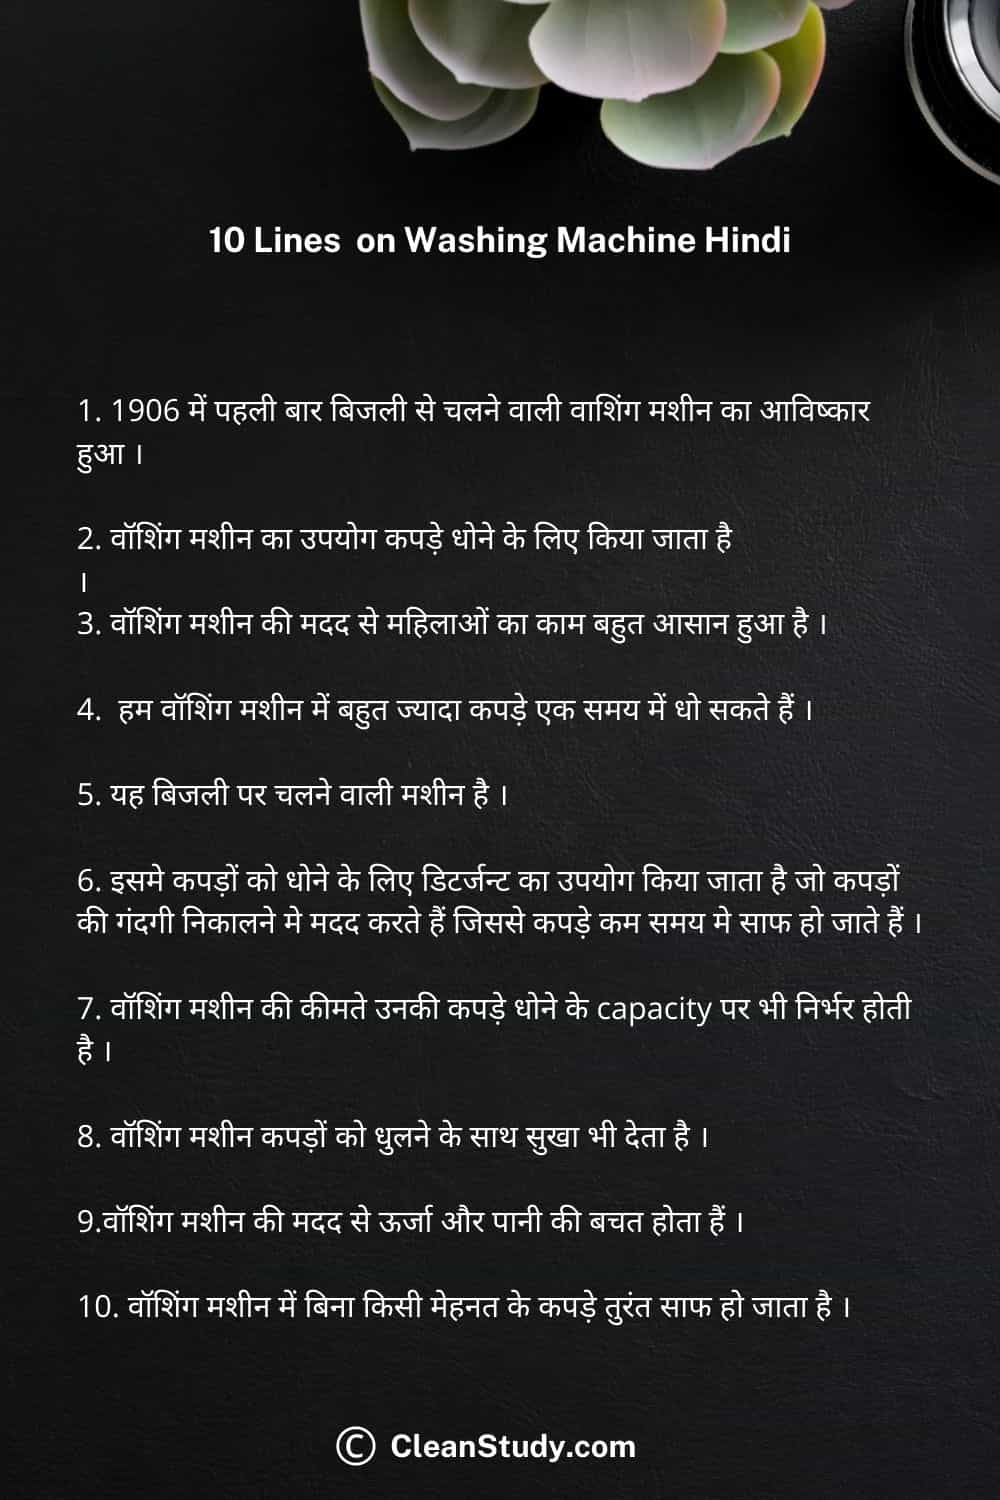 10 Lines on washing machine in hindi